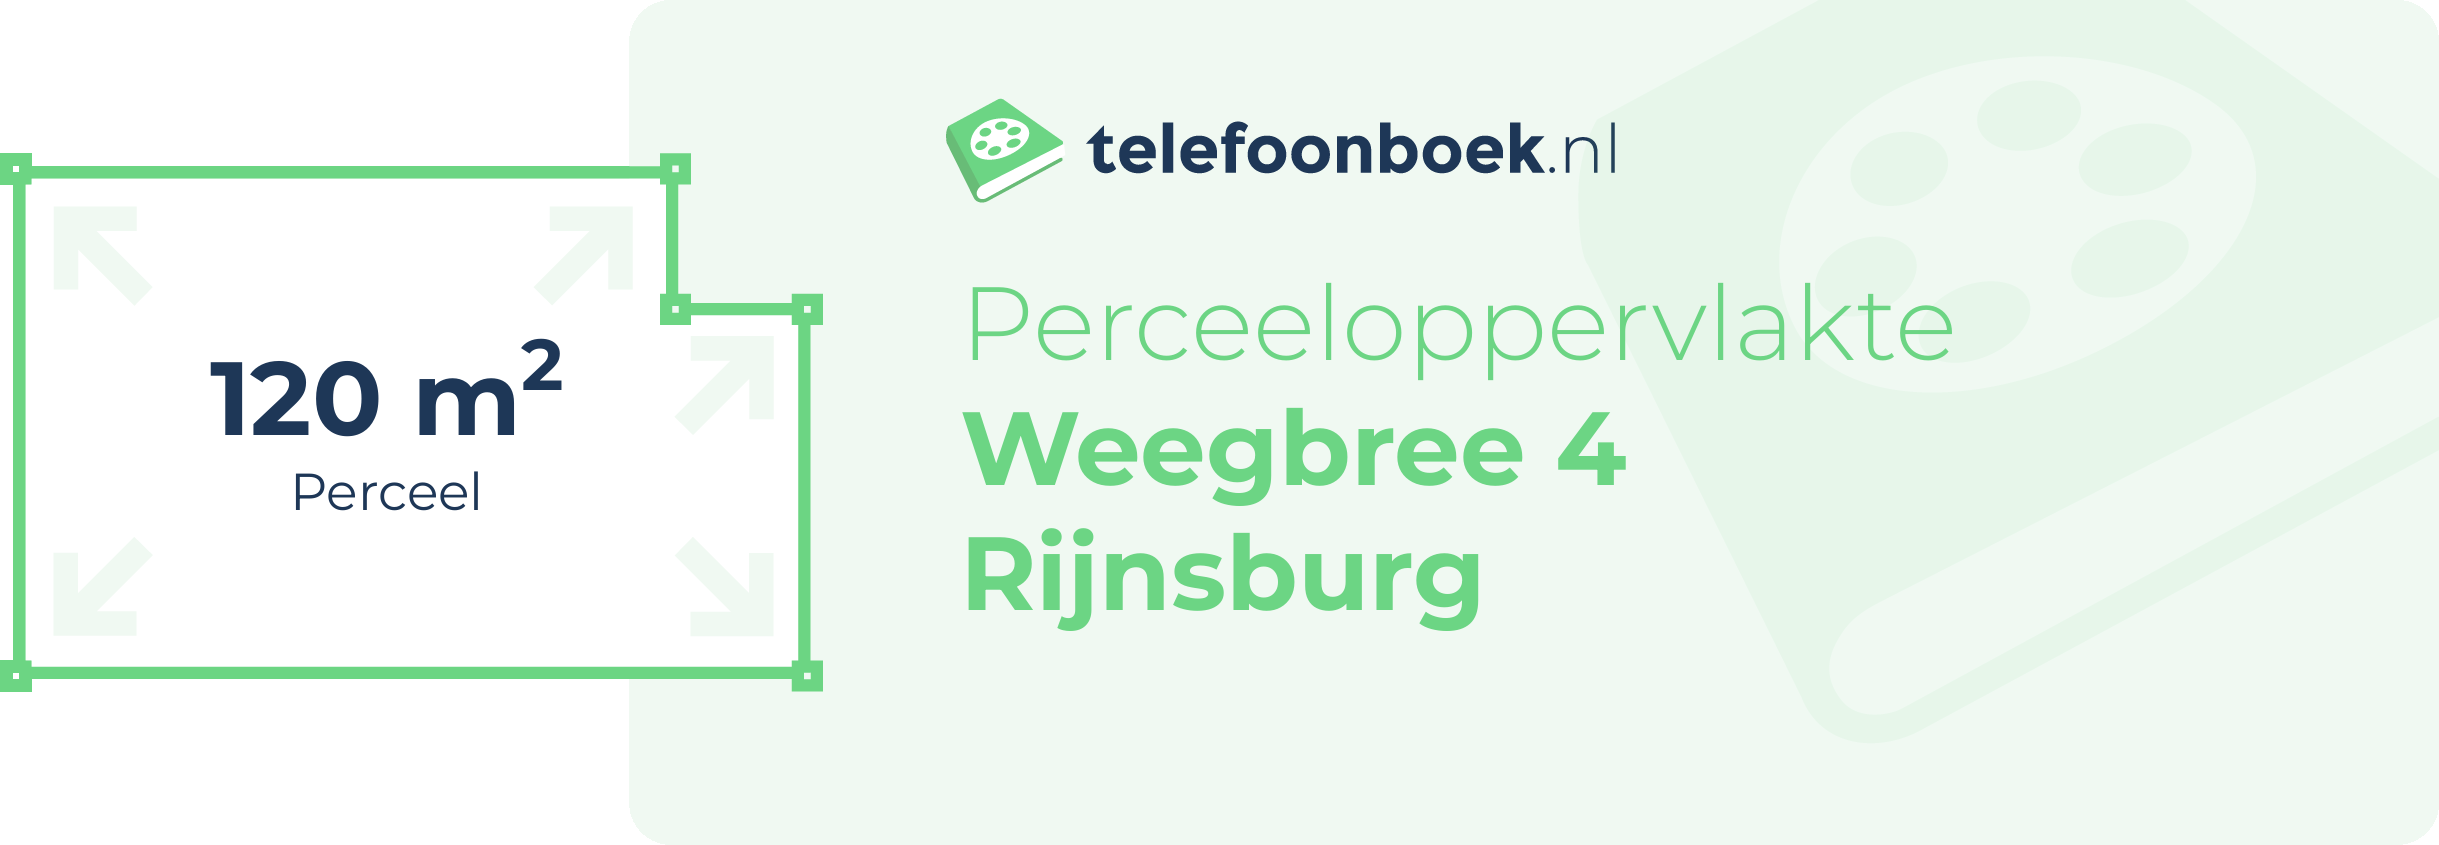 Perceeloppervlakte Weegbree 4 Rijnsburg